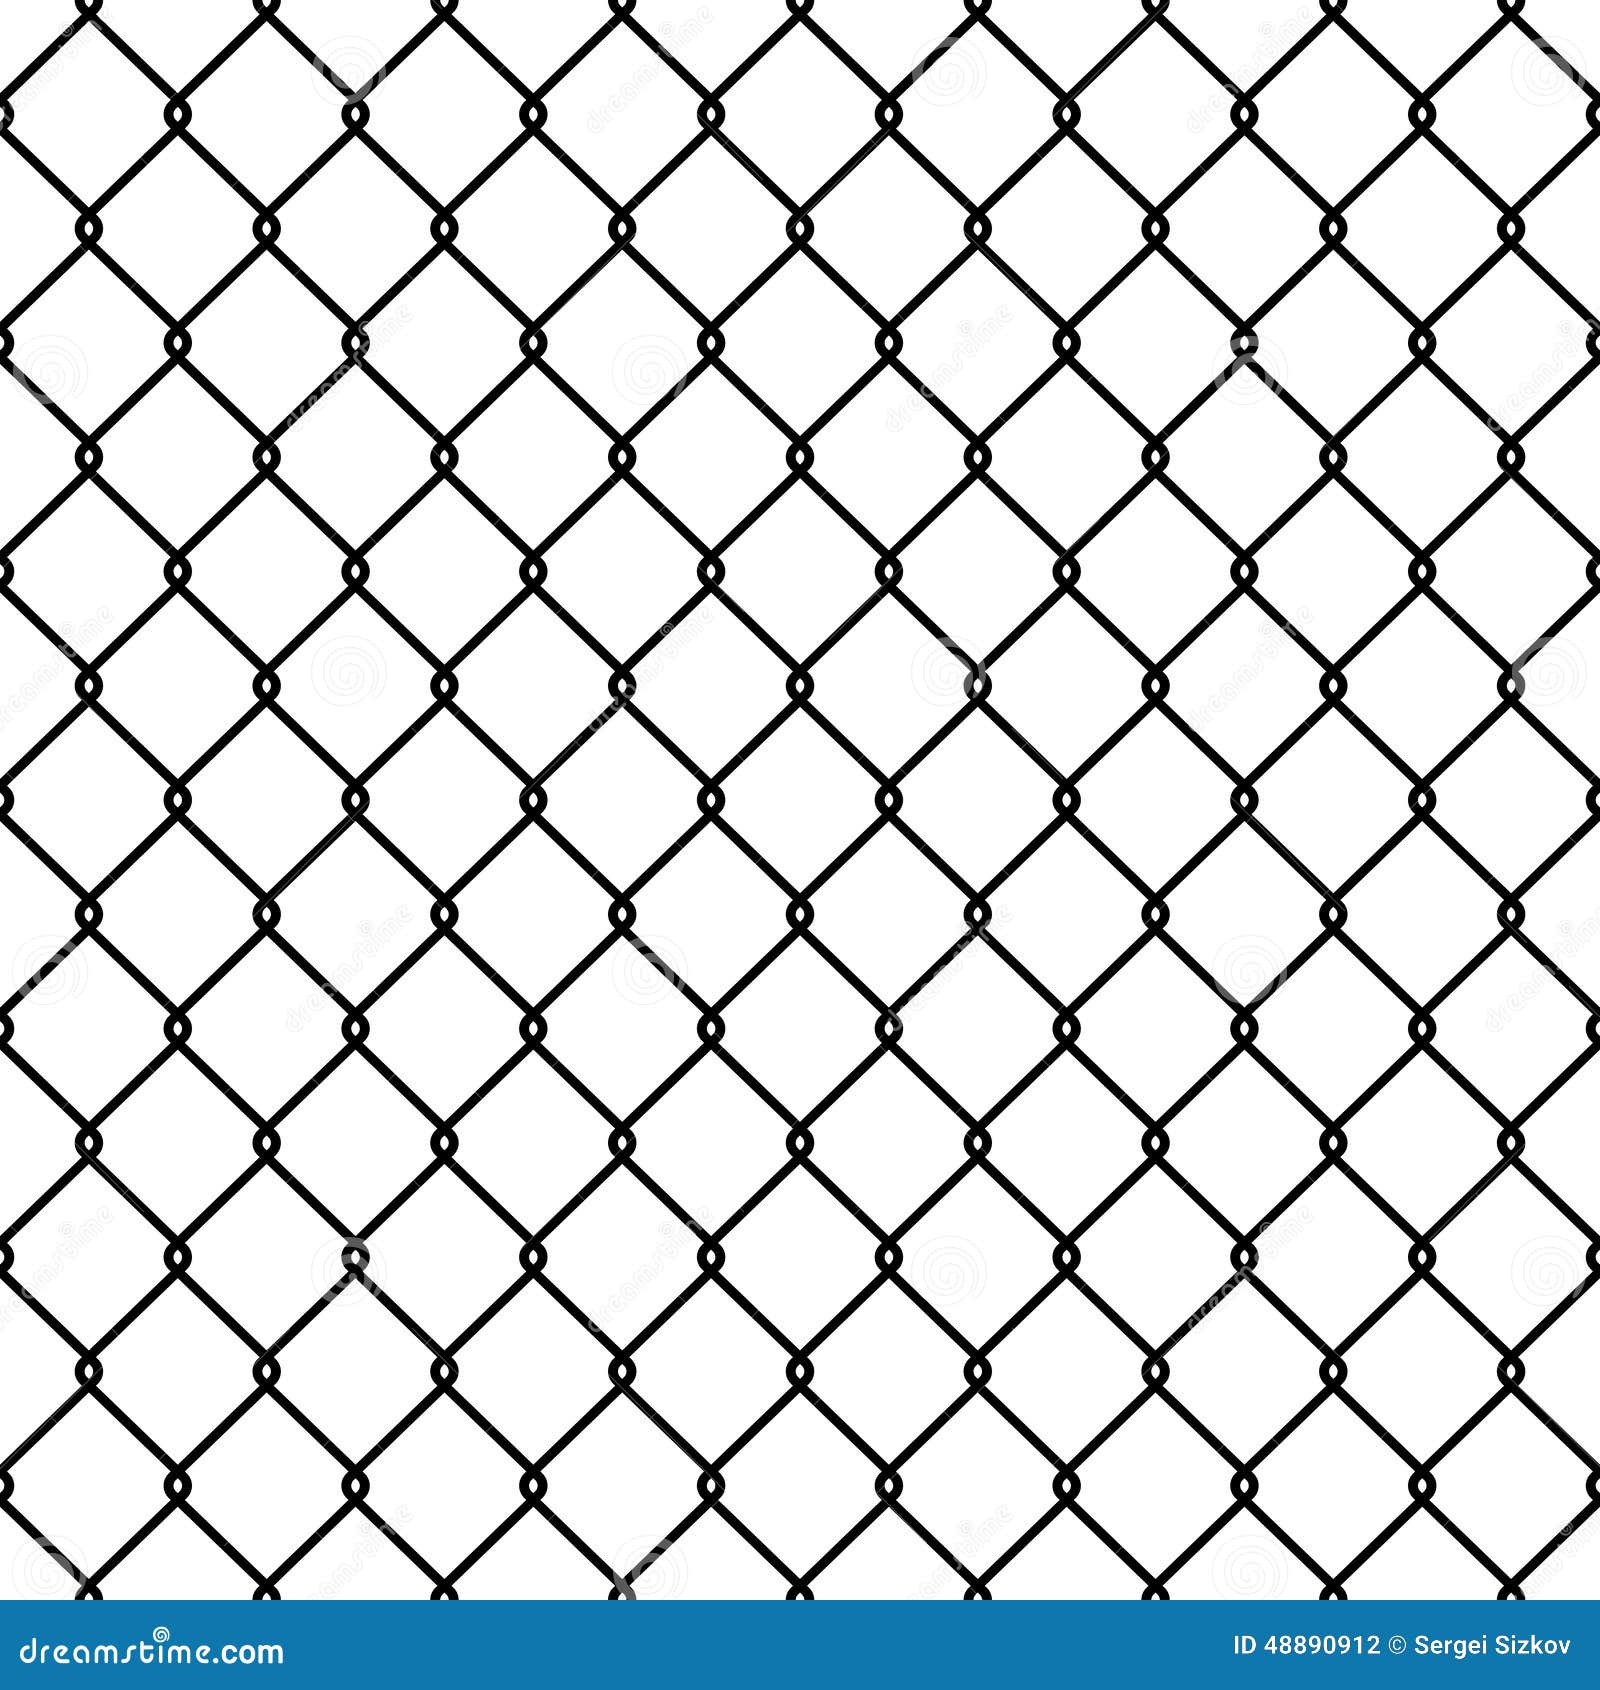 steel wire mesh seamless background. 